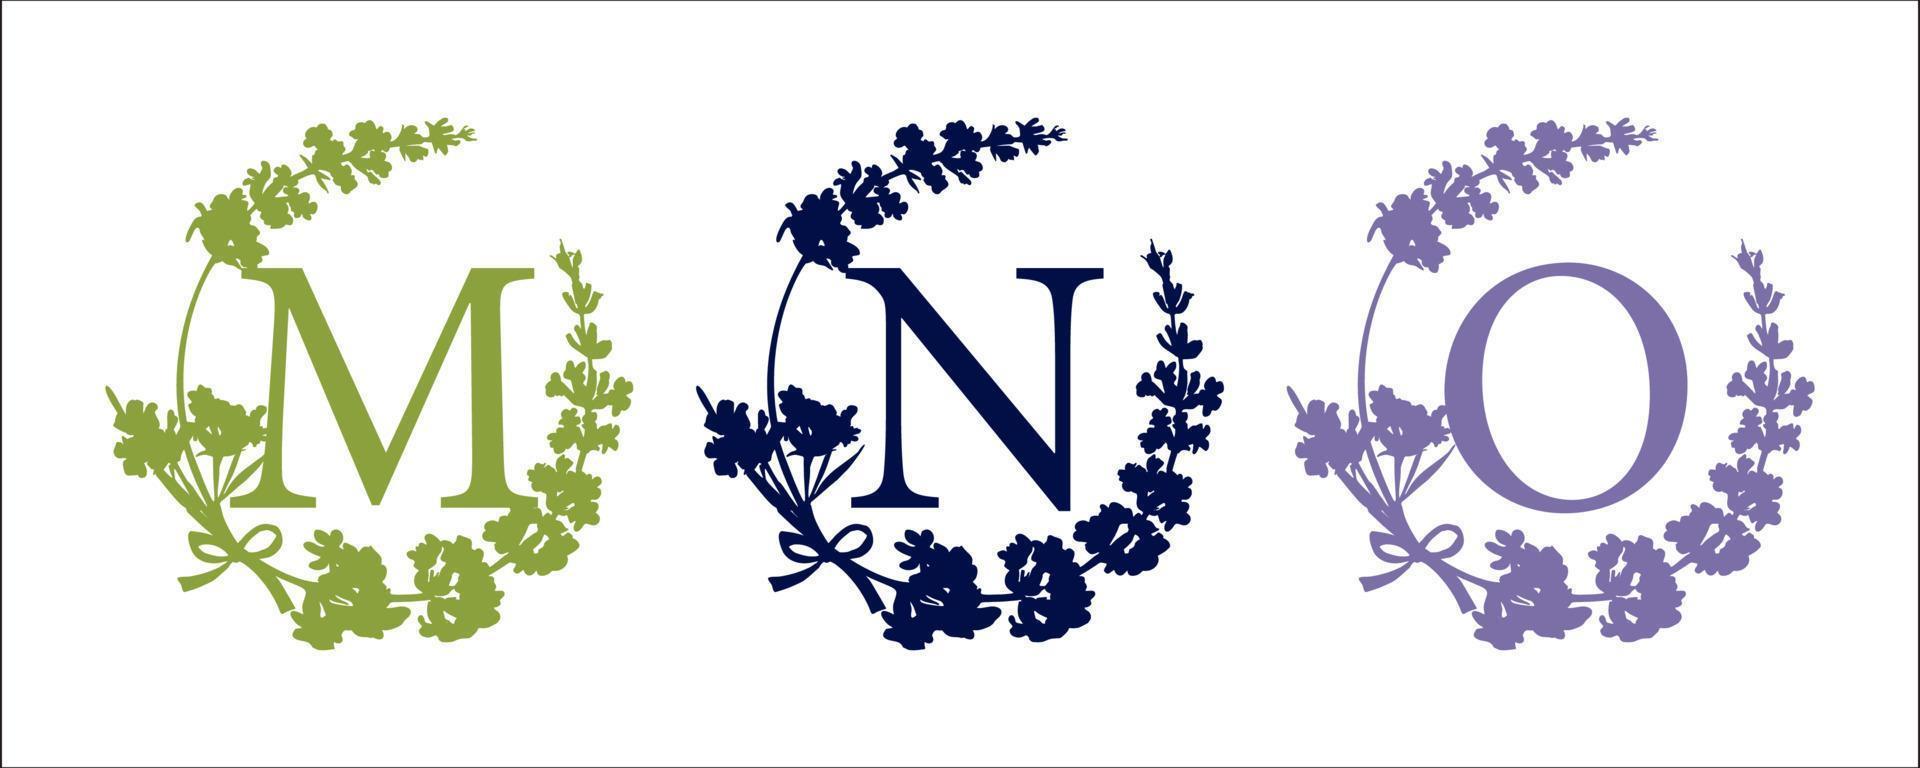 M N O letter. Set modern hand-drawn silhouette sketch illustrations. Lavender flower wreath with alphabet monogram. good idea for wedding decor. Vintage vector typographic emblem, logo, label design.